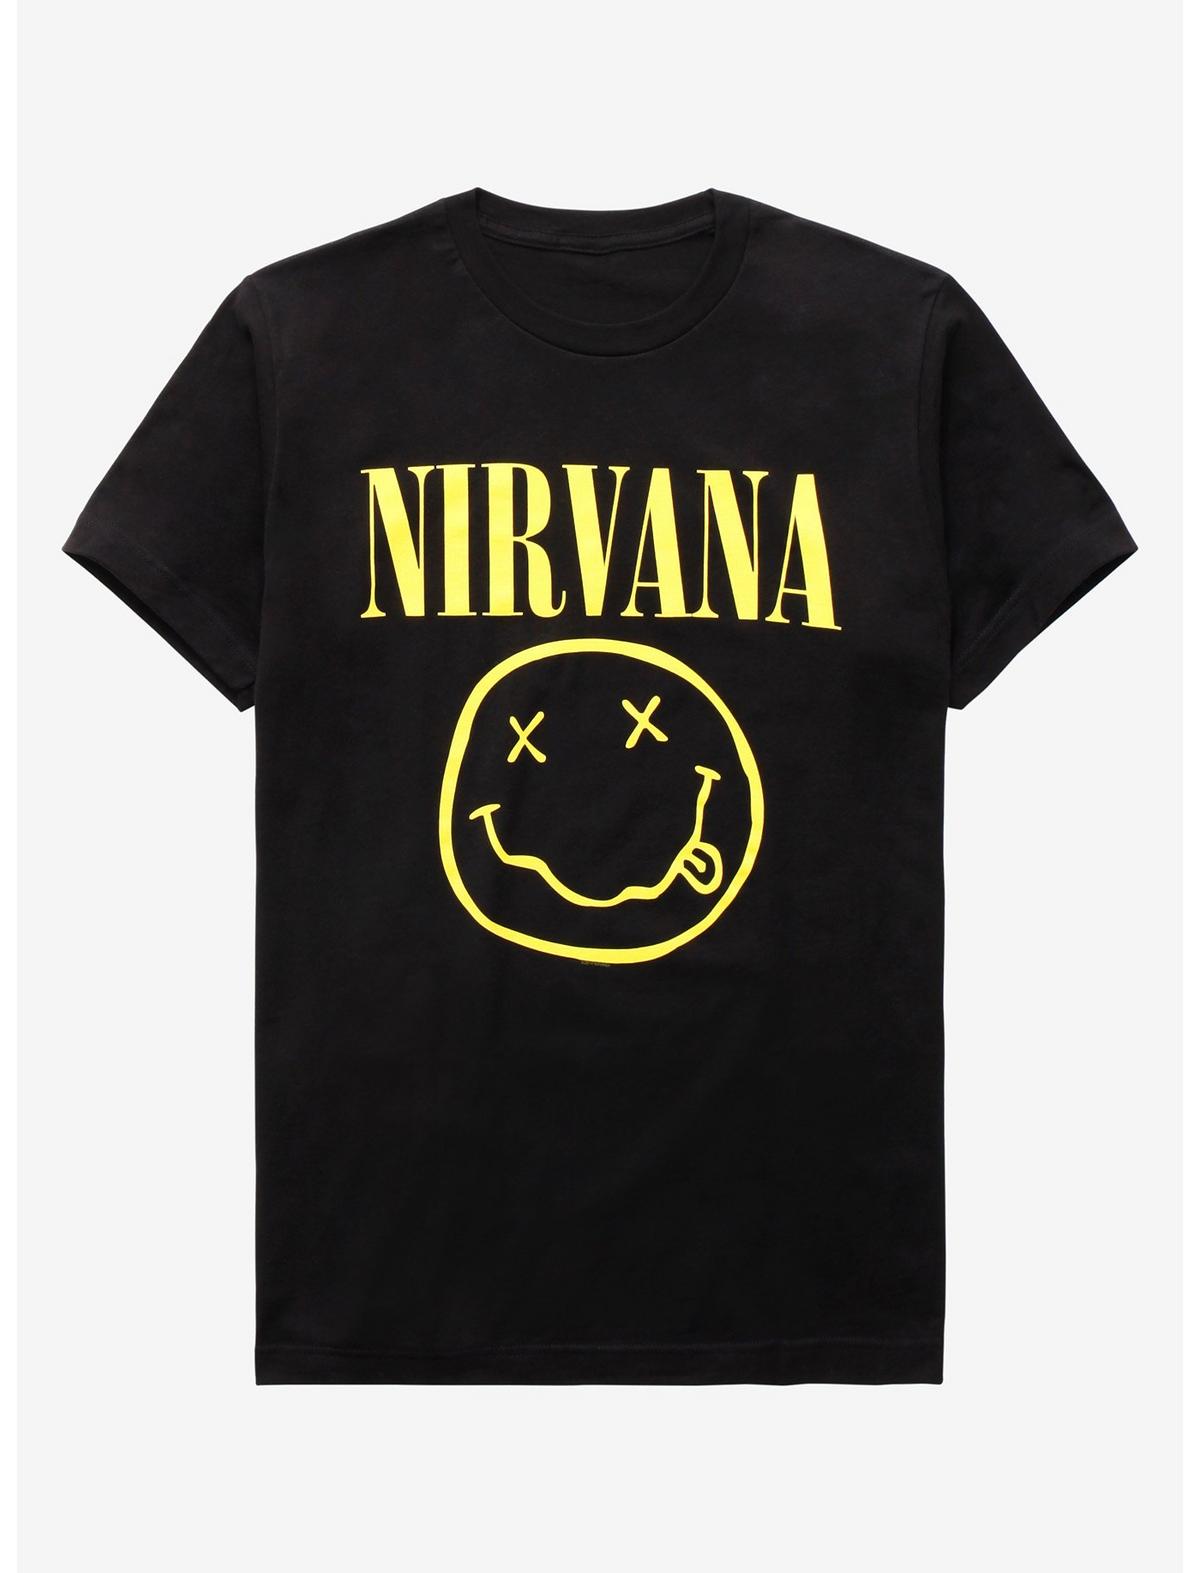 Classic Nirvana Smile Band T-Shirt - Mens/Unisex